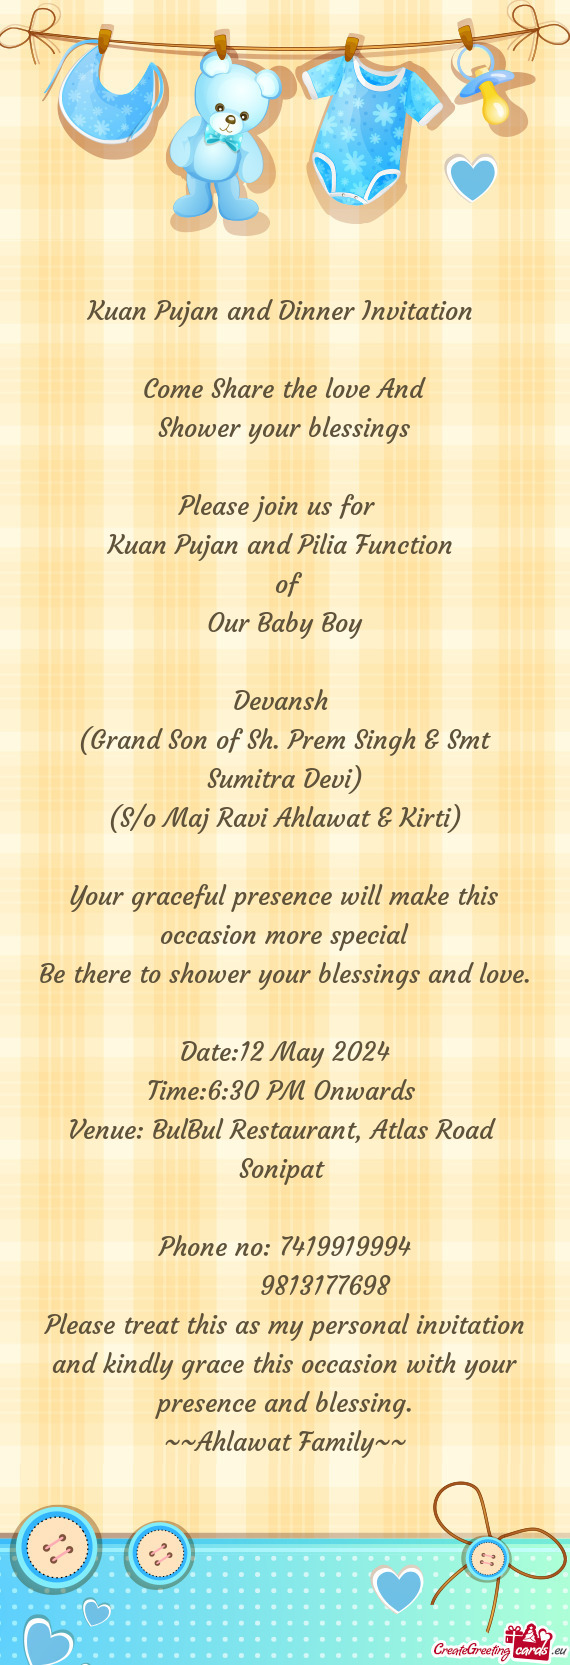 Kuan Pujan and Dinner Invitation